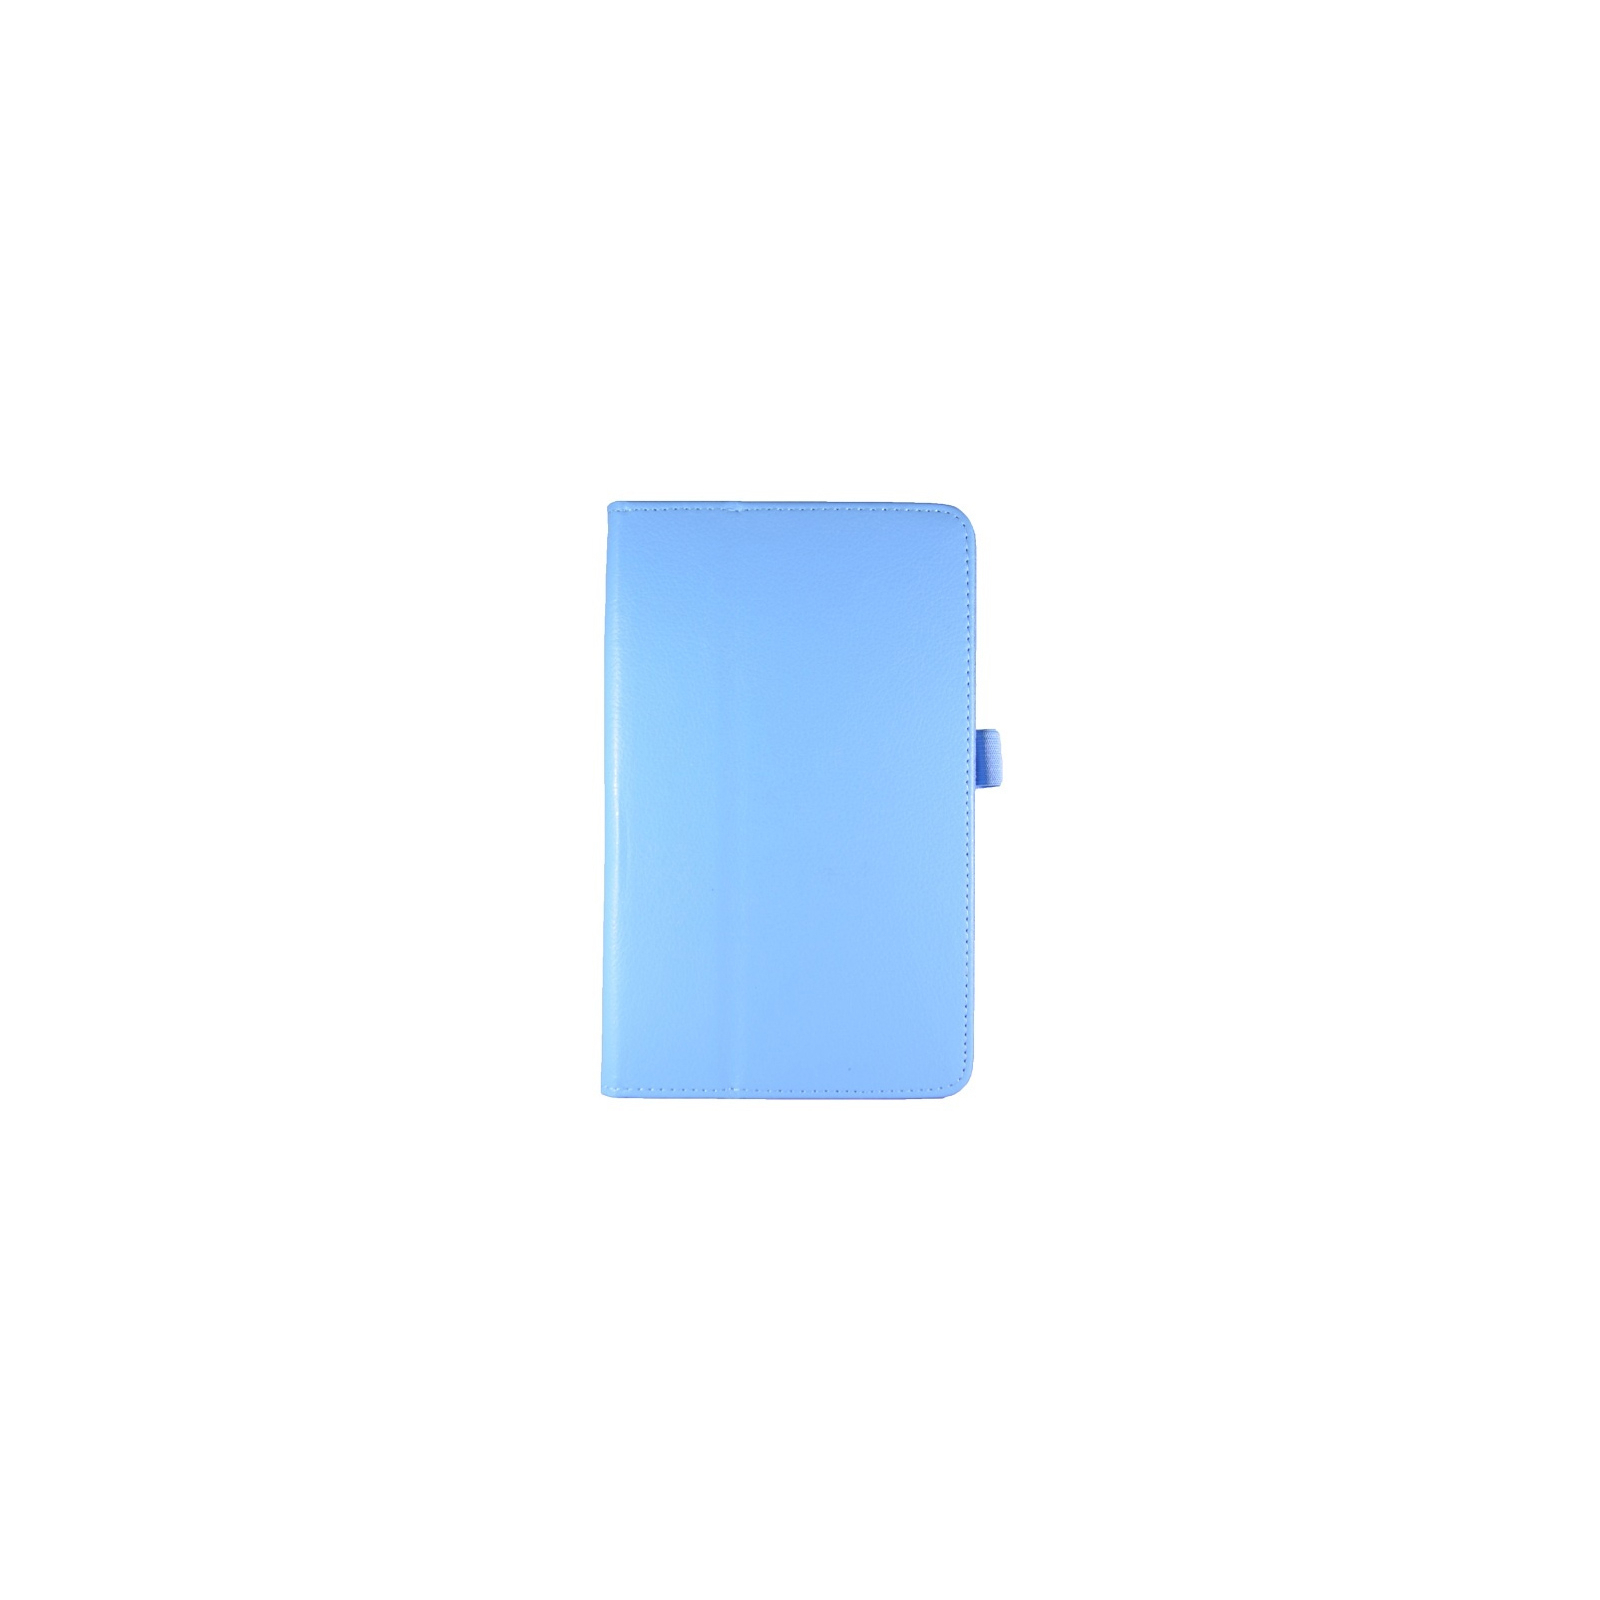 Чехол для планшета Pro-case 7" Asus MeMOPad HD 7 ME176 blue (ME176bl)